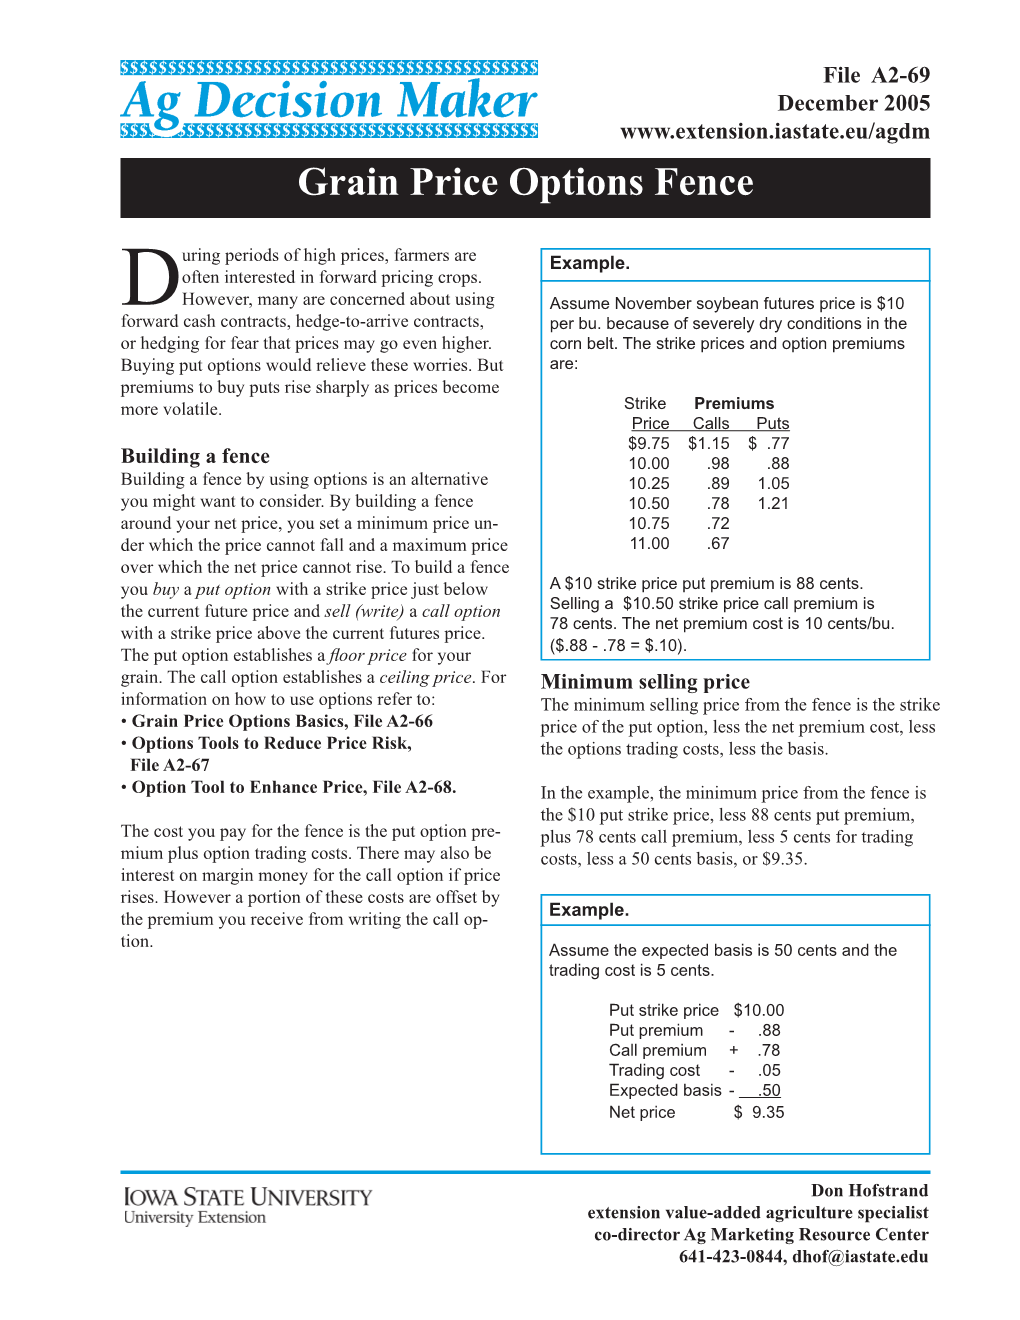 Grain Price Options Fence